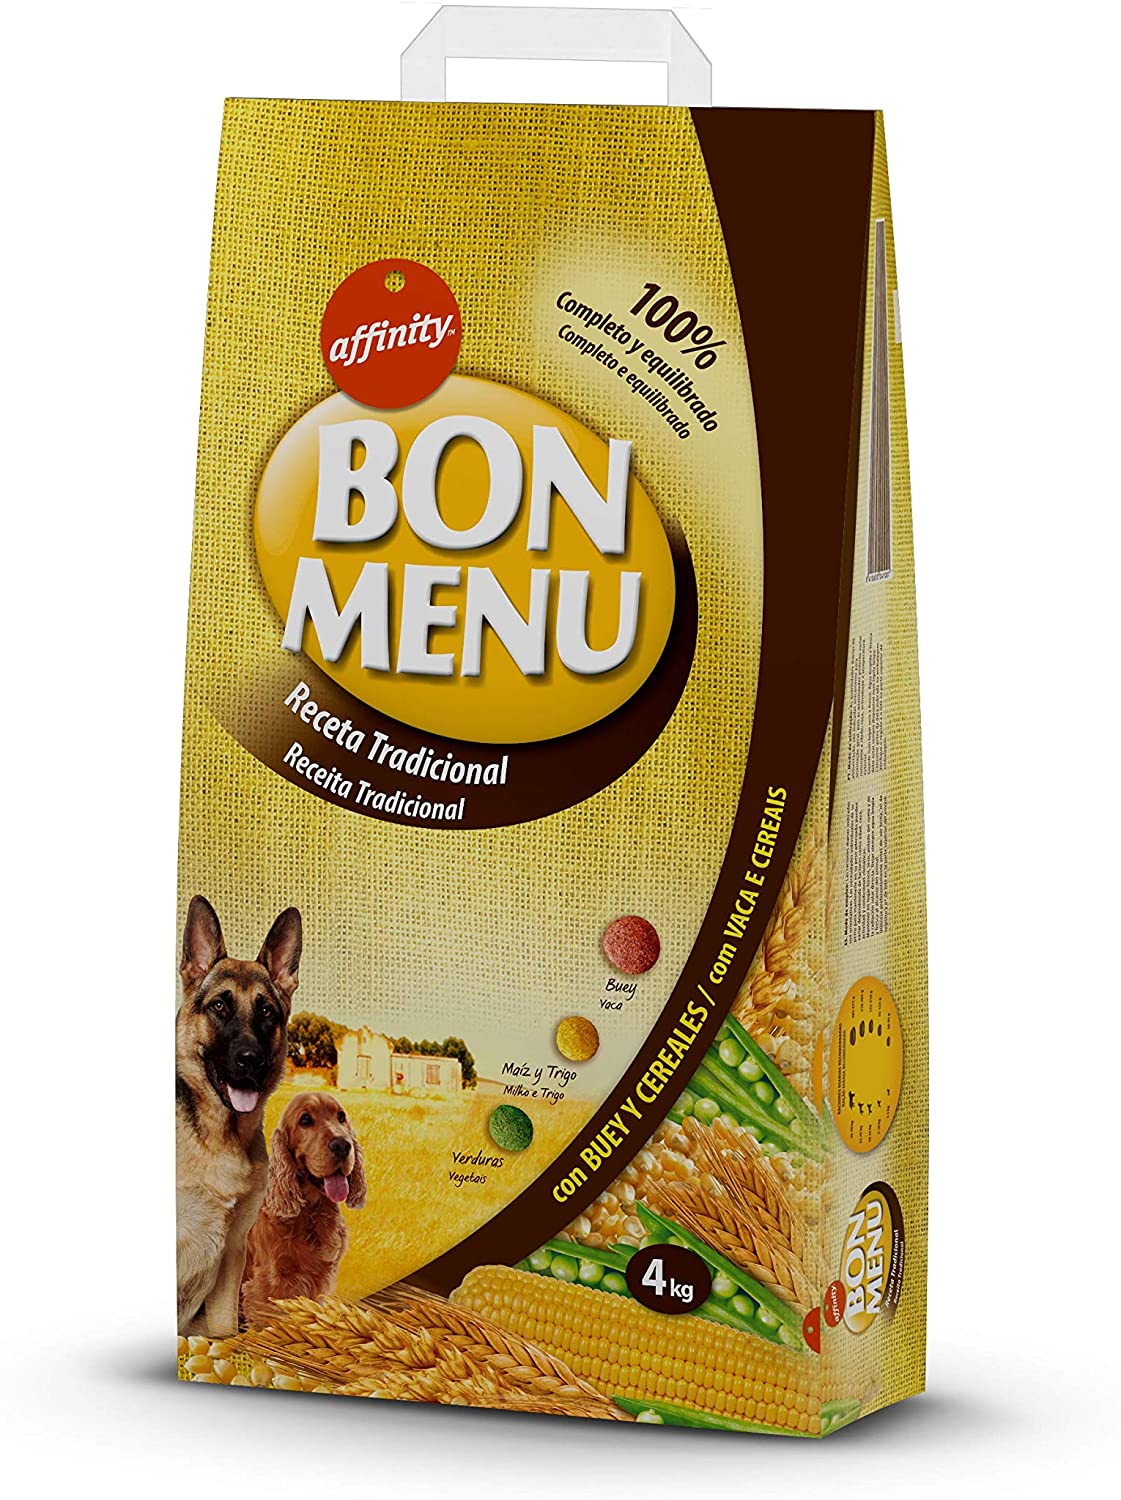  Affinity - Bon Menu - Receta Tradicional - Alimento Completo para Perros Adultos - 4 Kg 